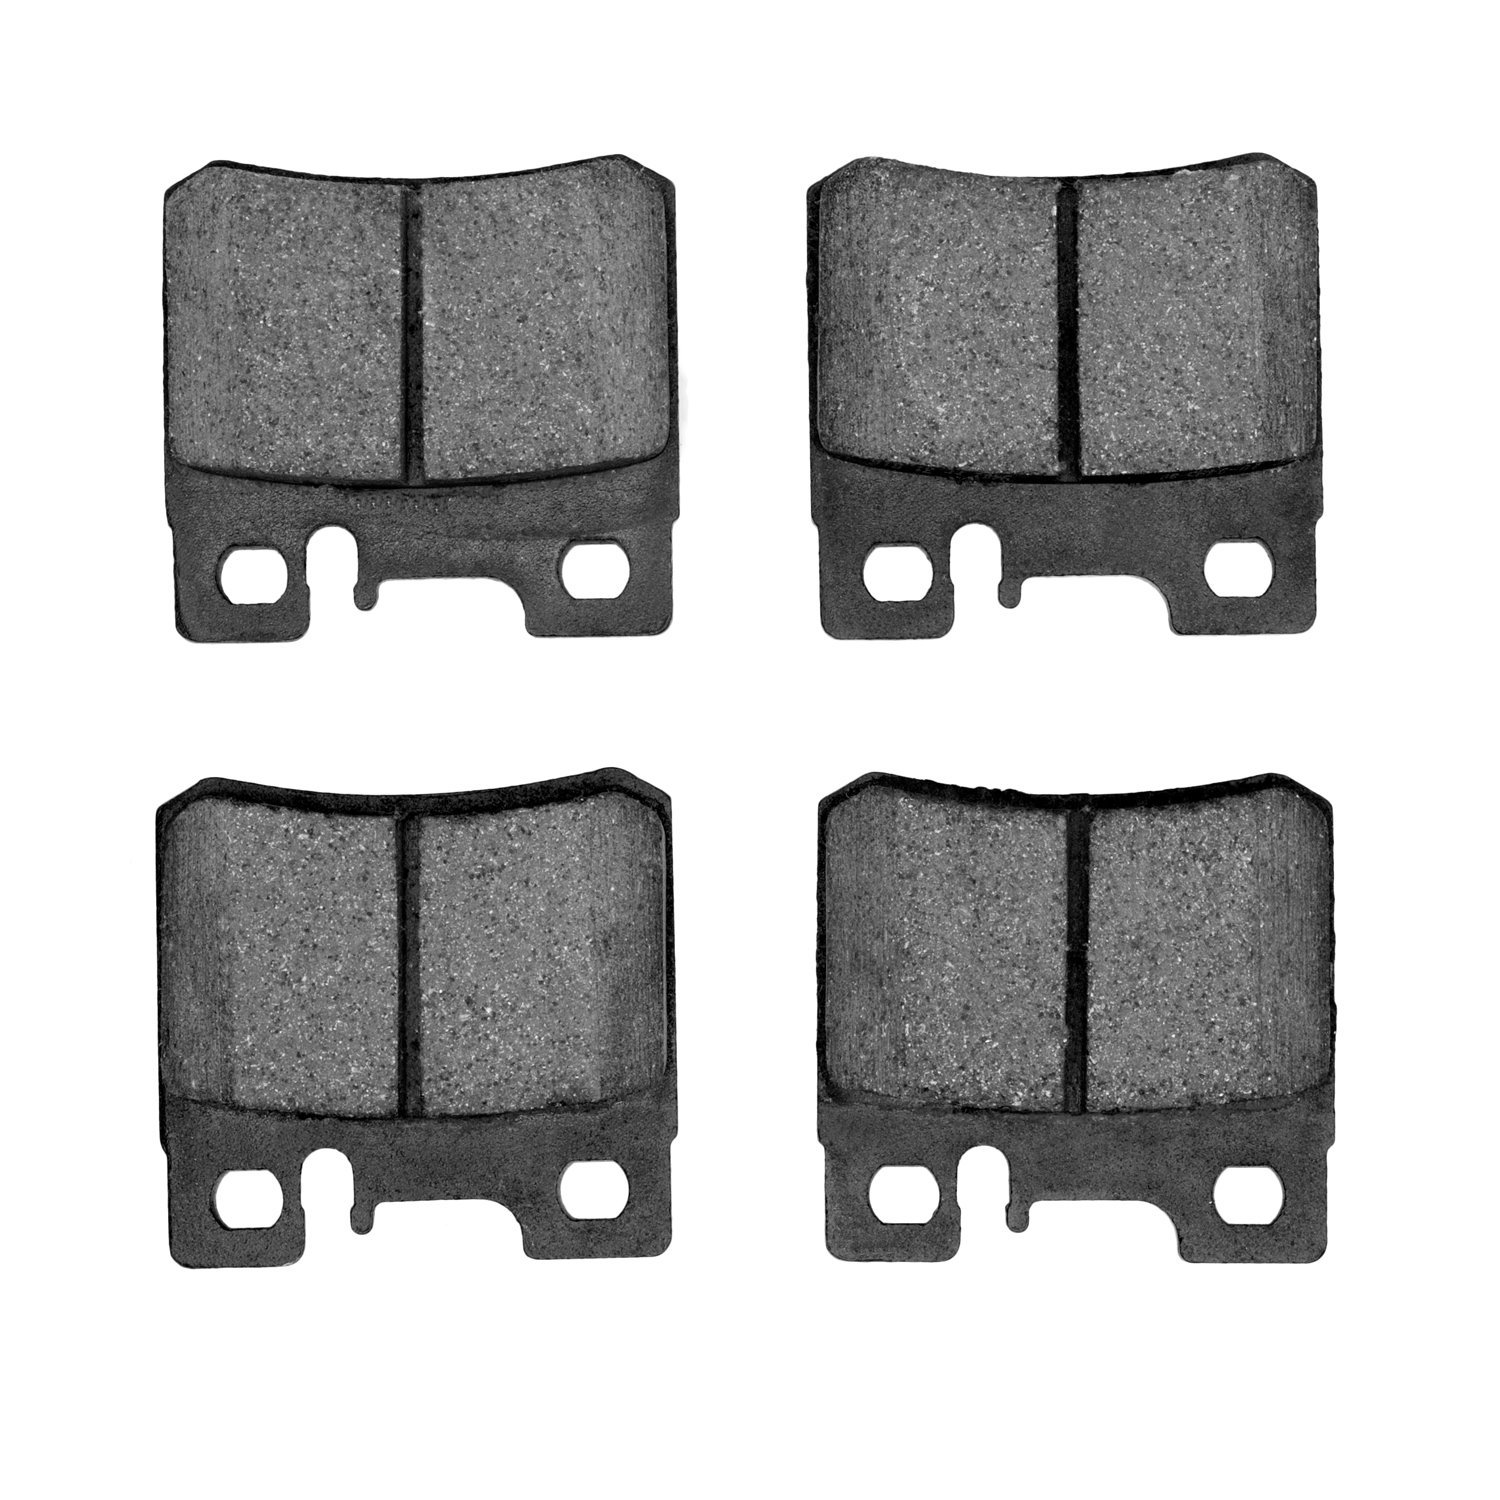 1310-0495-00 3000-Series Ceramic Brake Pads, 1987-2000 Multiple Makes/Models, Position: Rear